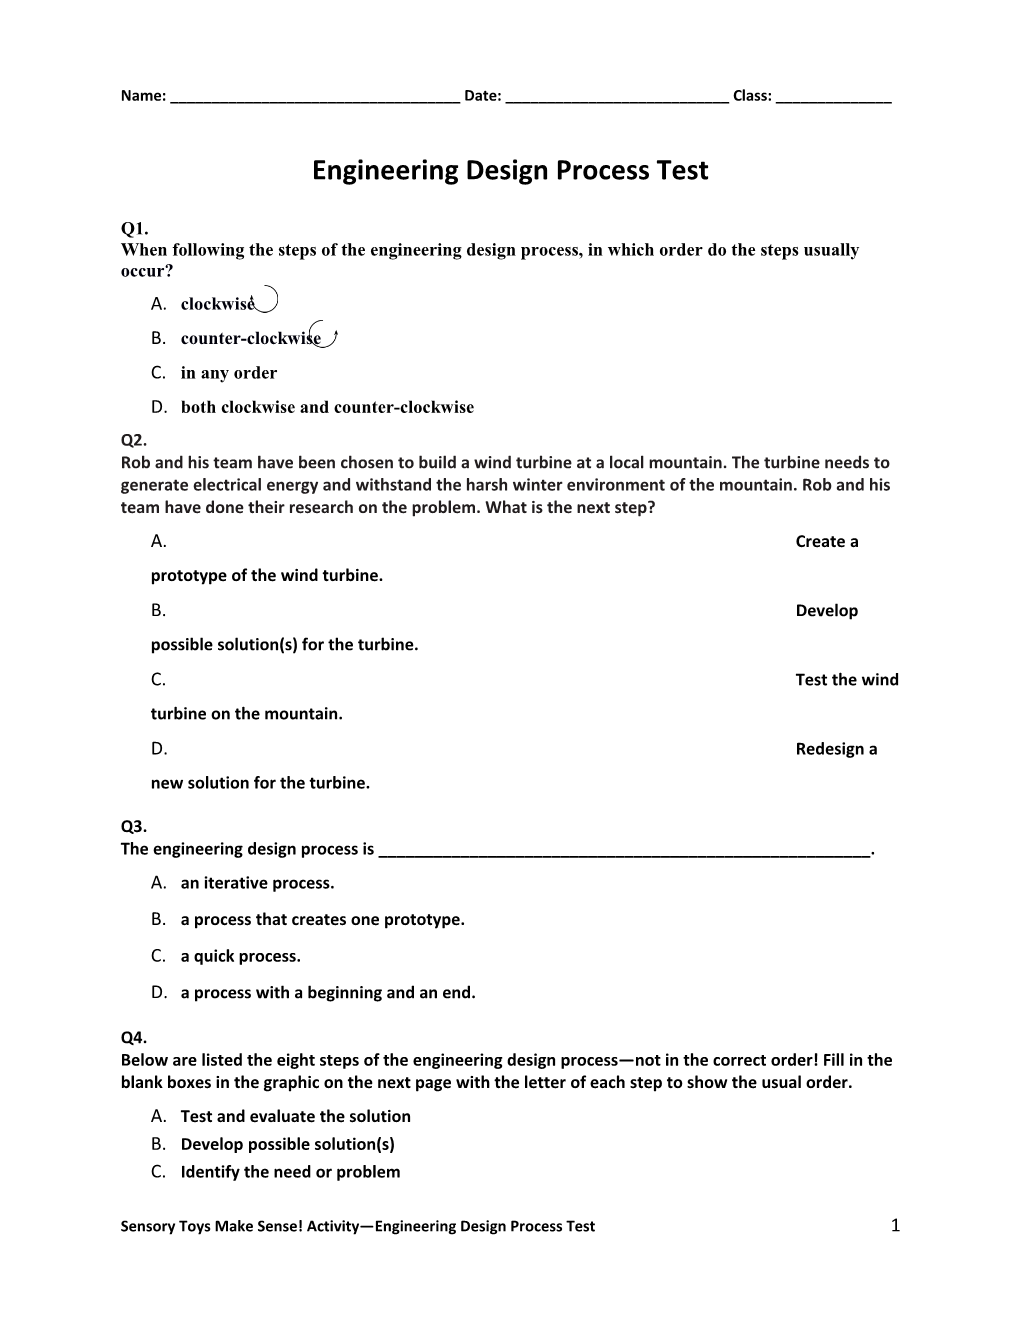 Engineering Design Process Test